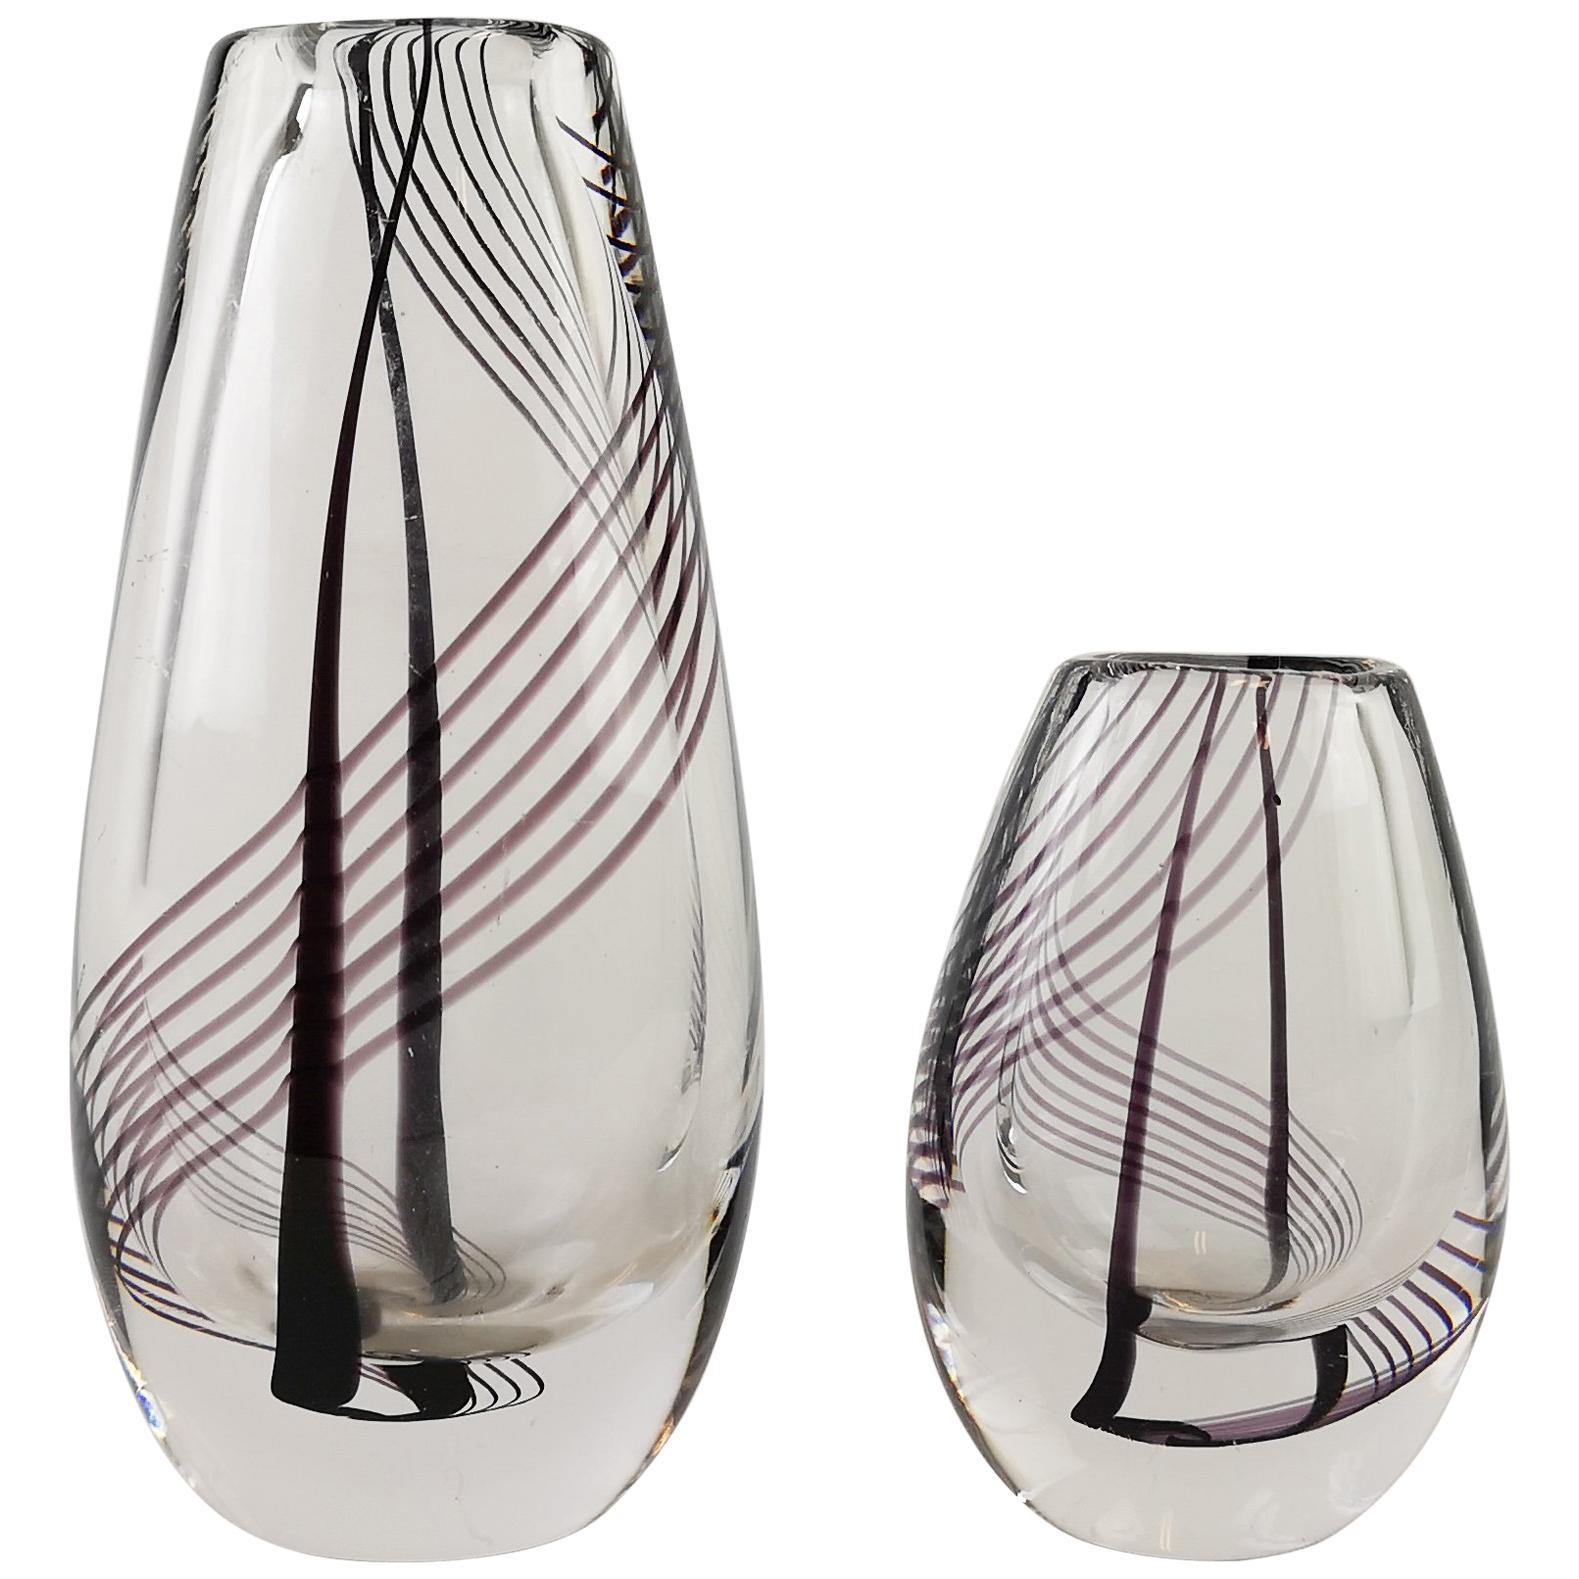 Signed Kosta Boda Art Glass Vases Vicke Lindstrand